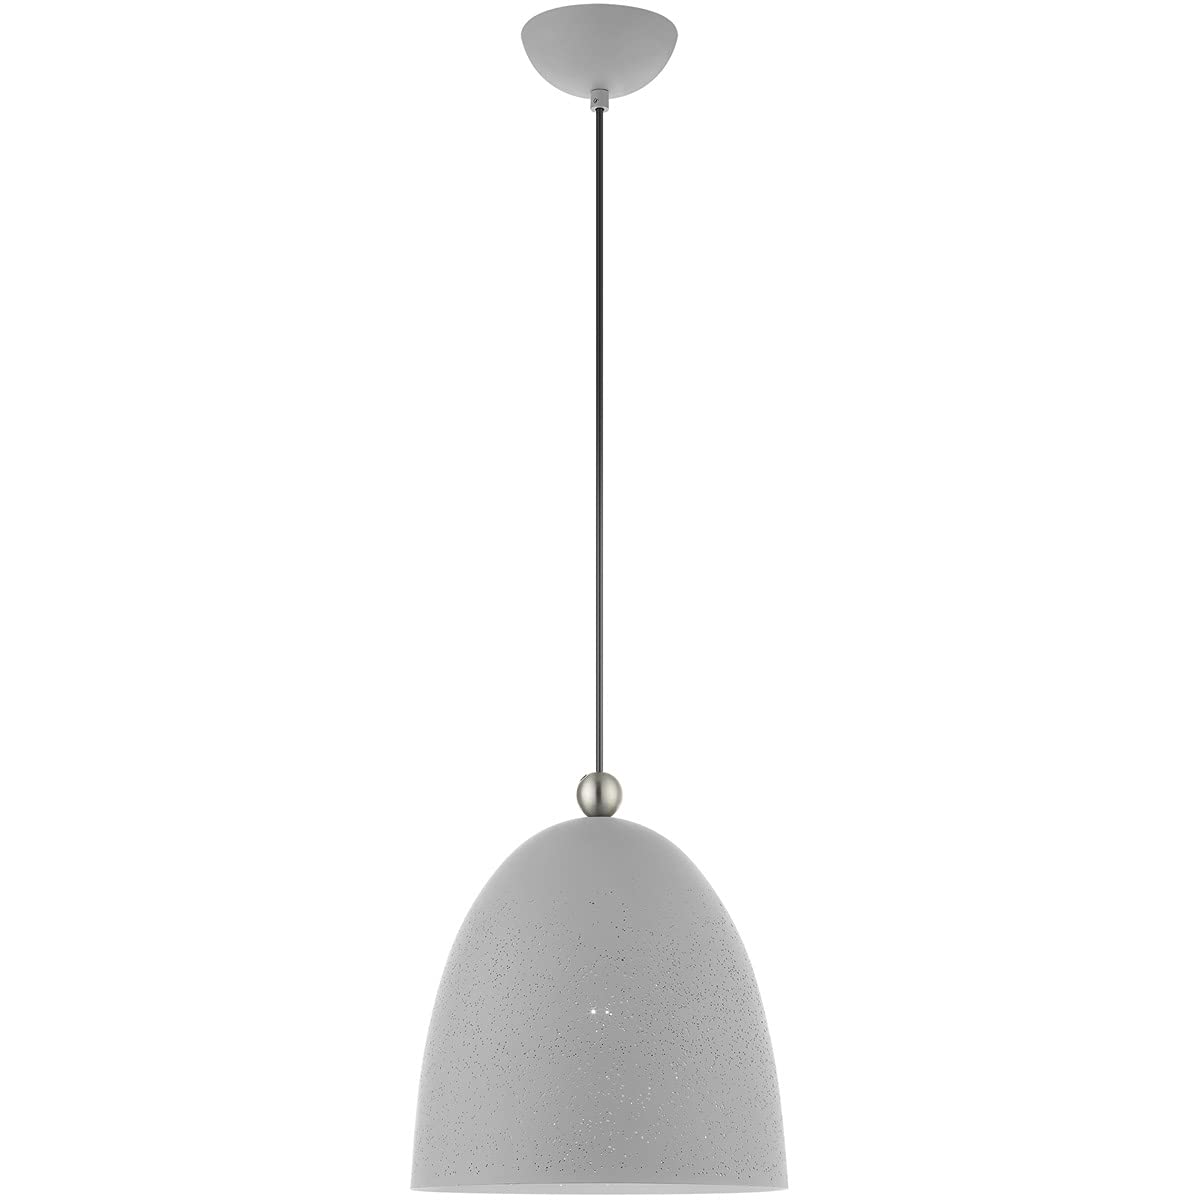 Livex Lighting 49109-80 1 Light Nordic Gray Pendant